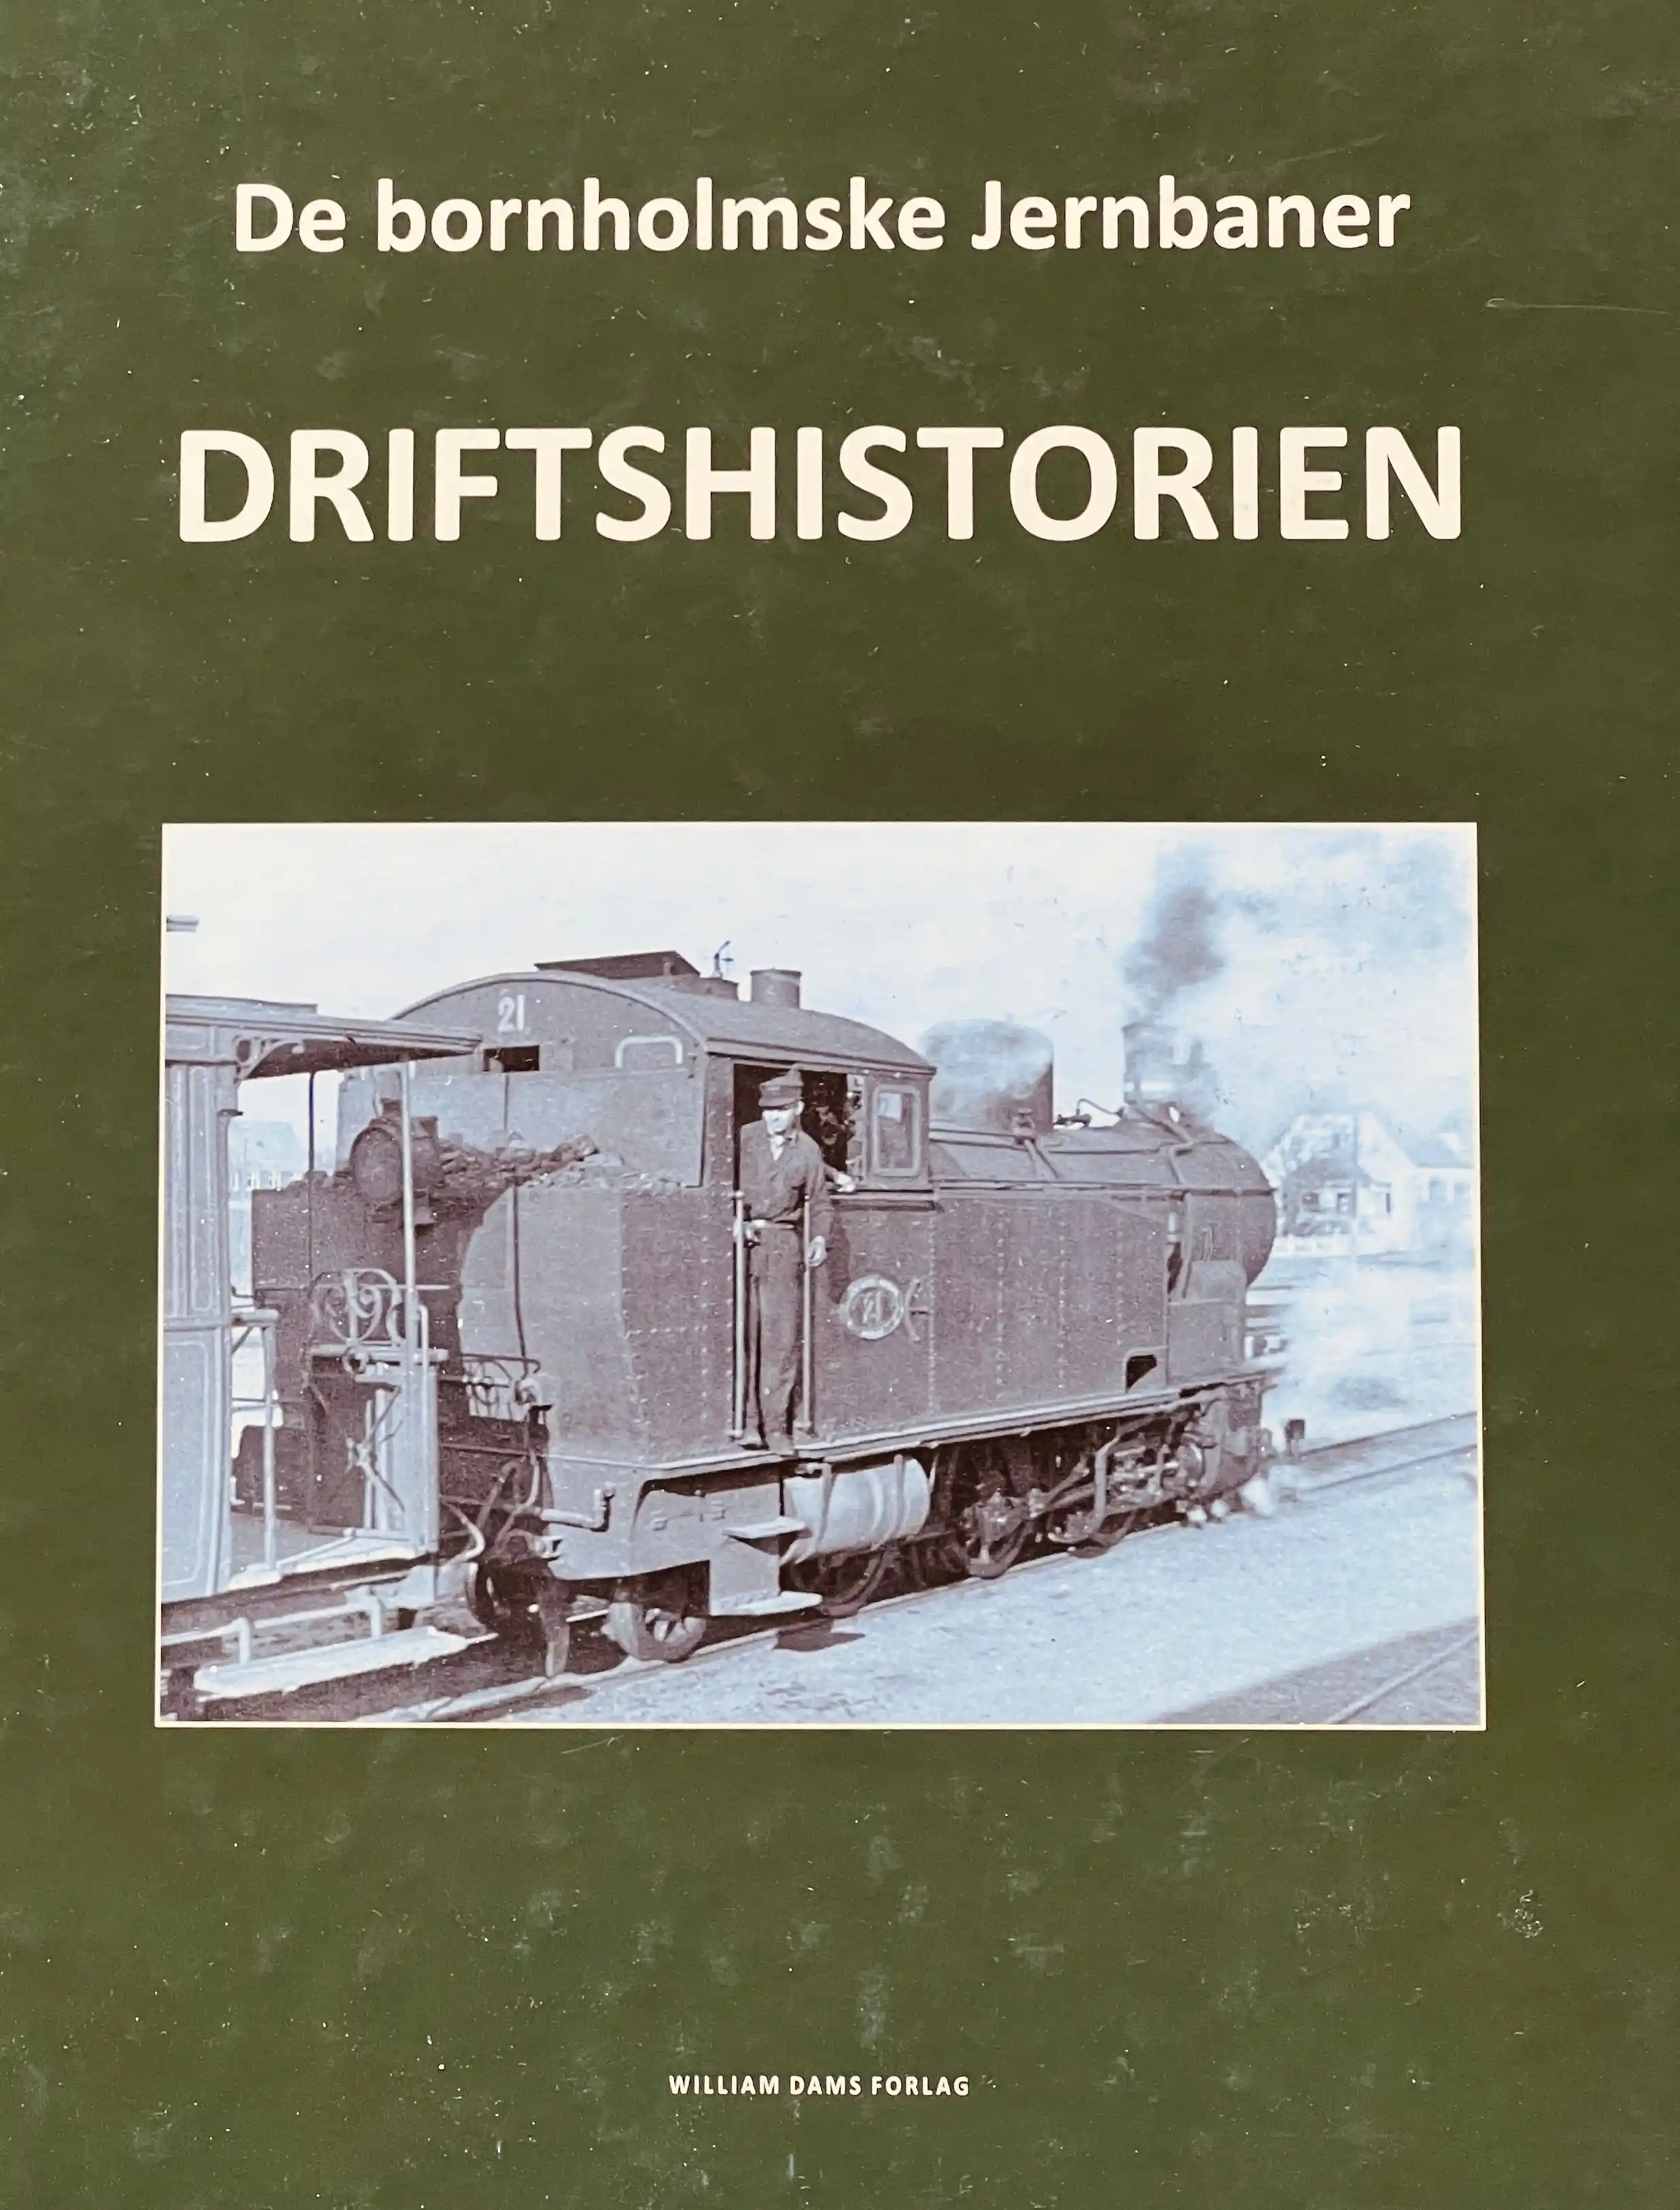 De bornholmske jernbaner: Driftshistorien